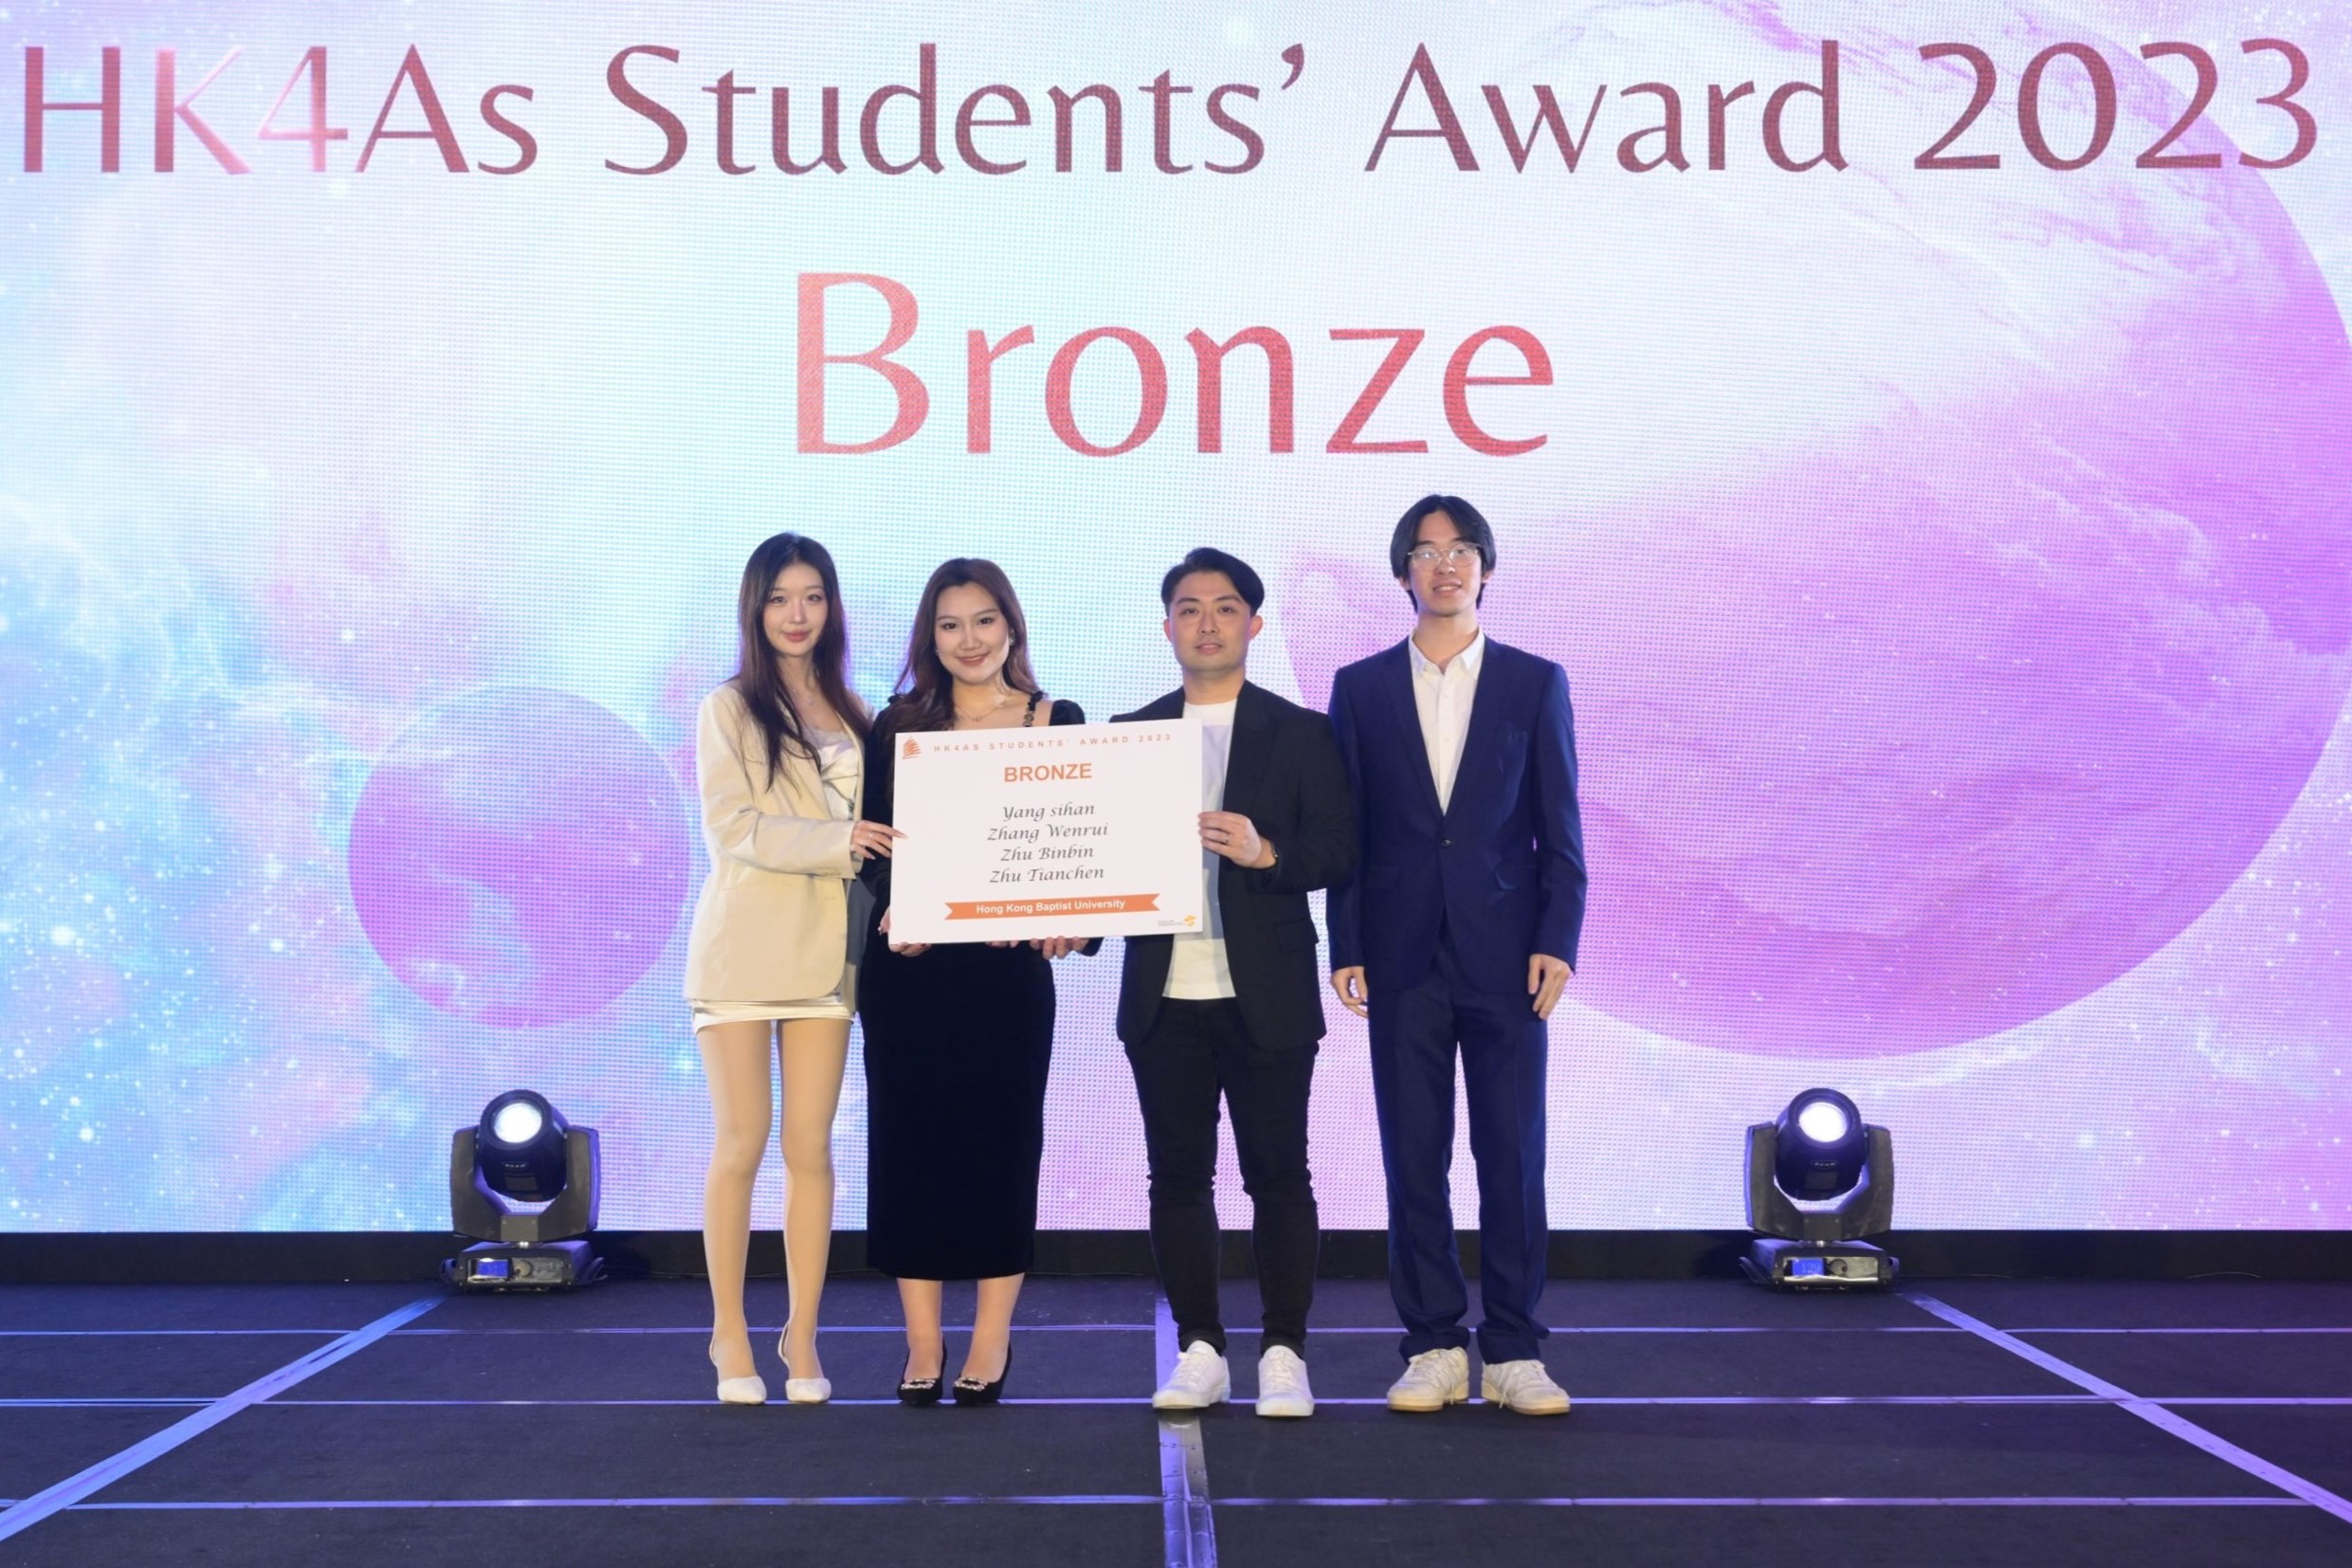 Communication students shine bright at HK4As Students' Award